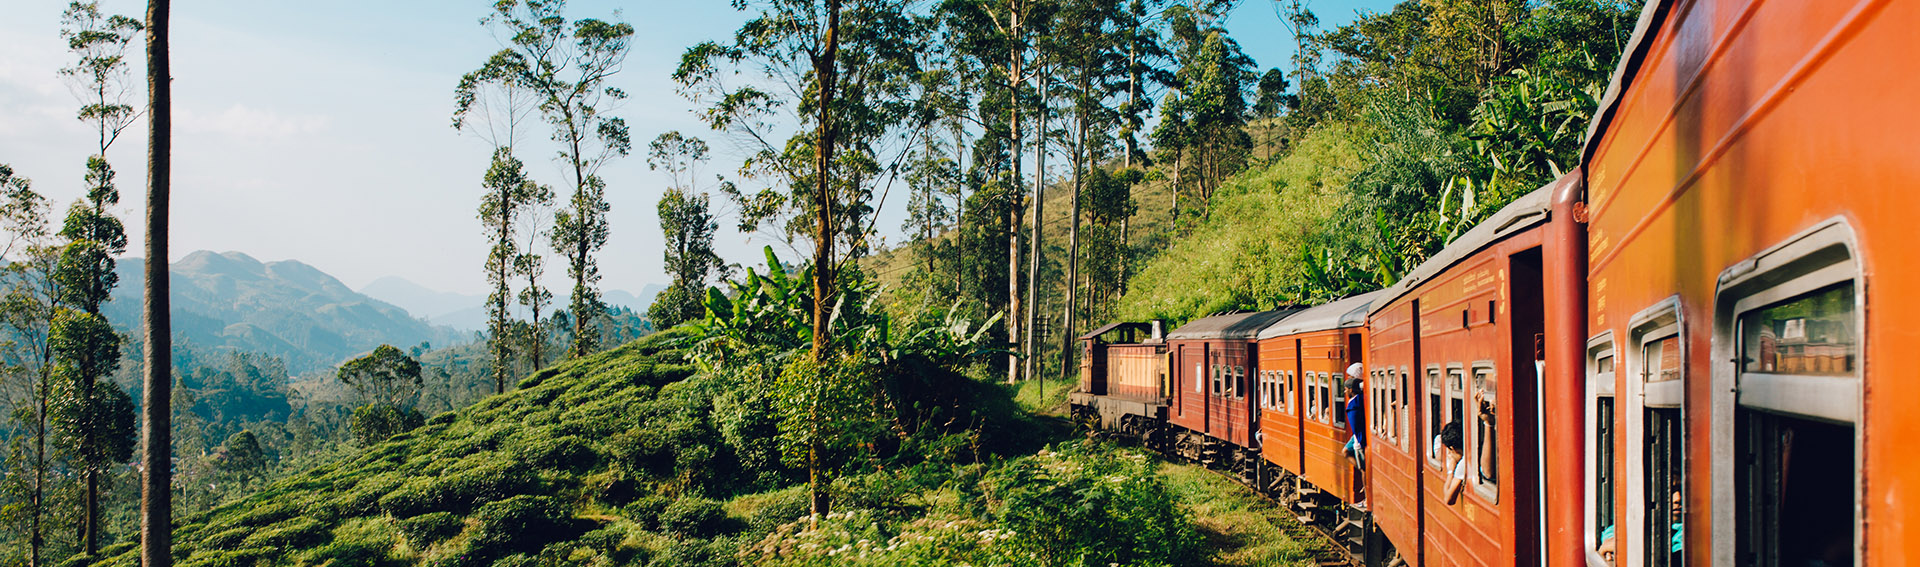 Sri Lanka, Zug, Reise, Landschaften